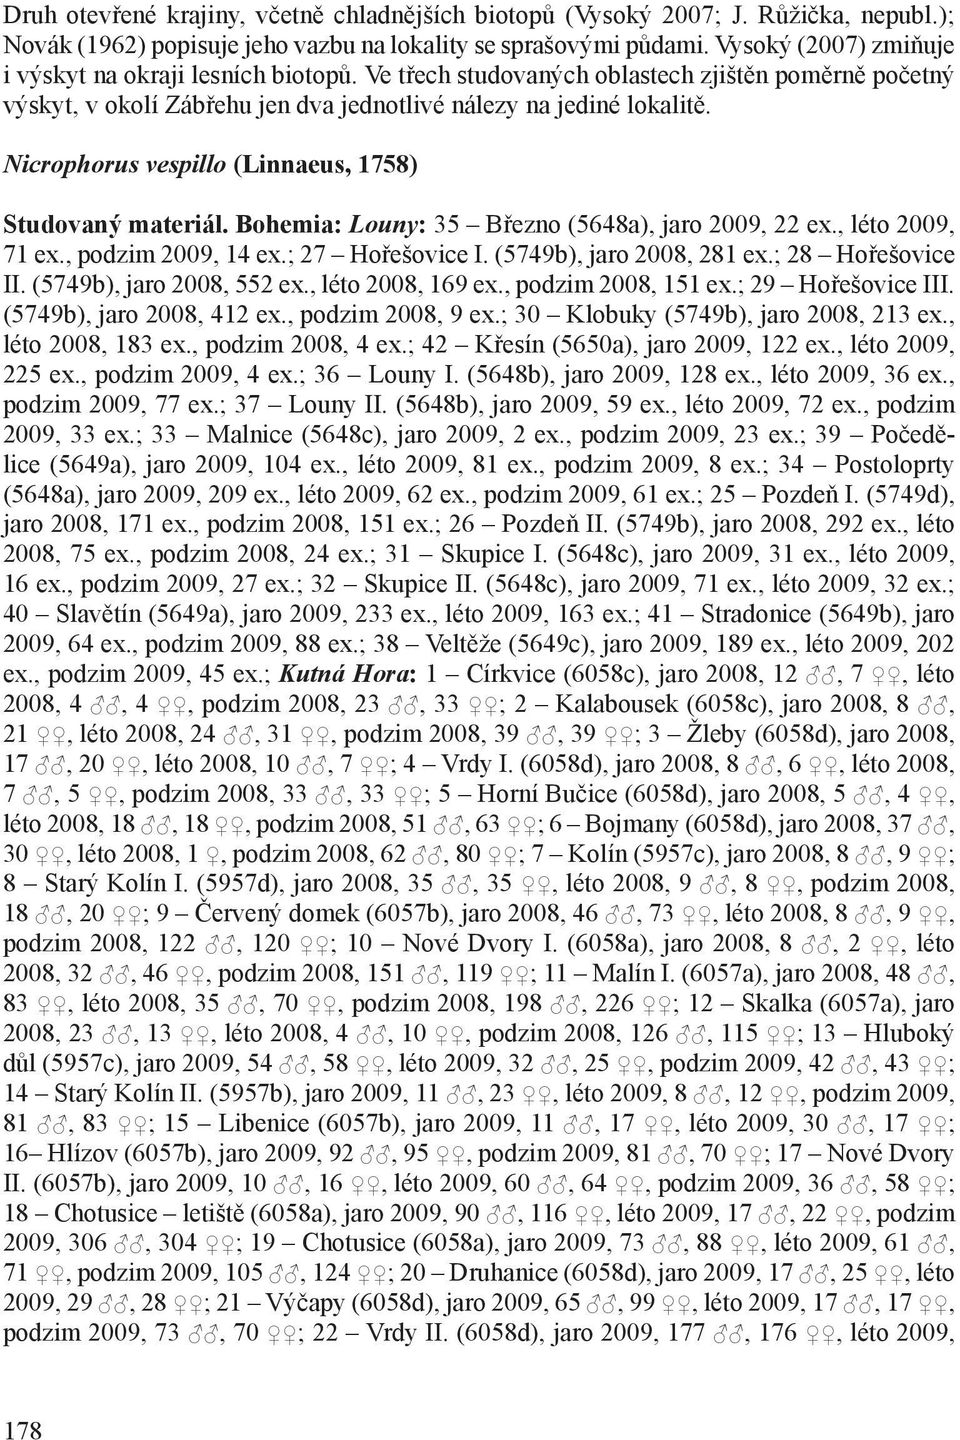 Nicrophorus vespillo (Linnaeus, 1758) Studovaný materiál. Bohemia: Louny: 35 Březno (5648a), jaro 2009, 22 ex., léto 2009, 71 ex., podzim 2009, 14 ex.; 27 Hořešovice I. (5749b), jaro 2008, 281 ex.